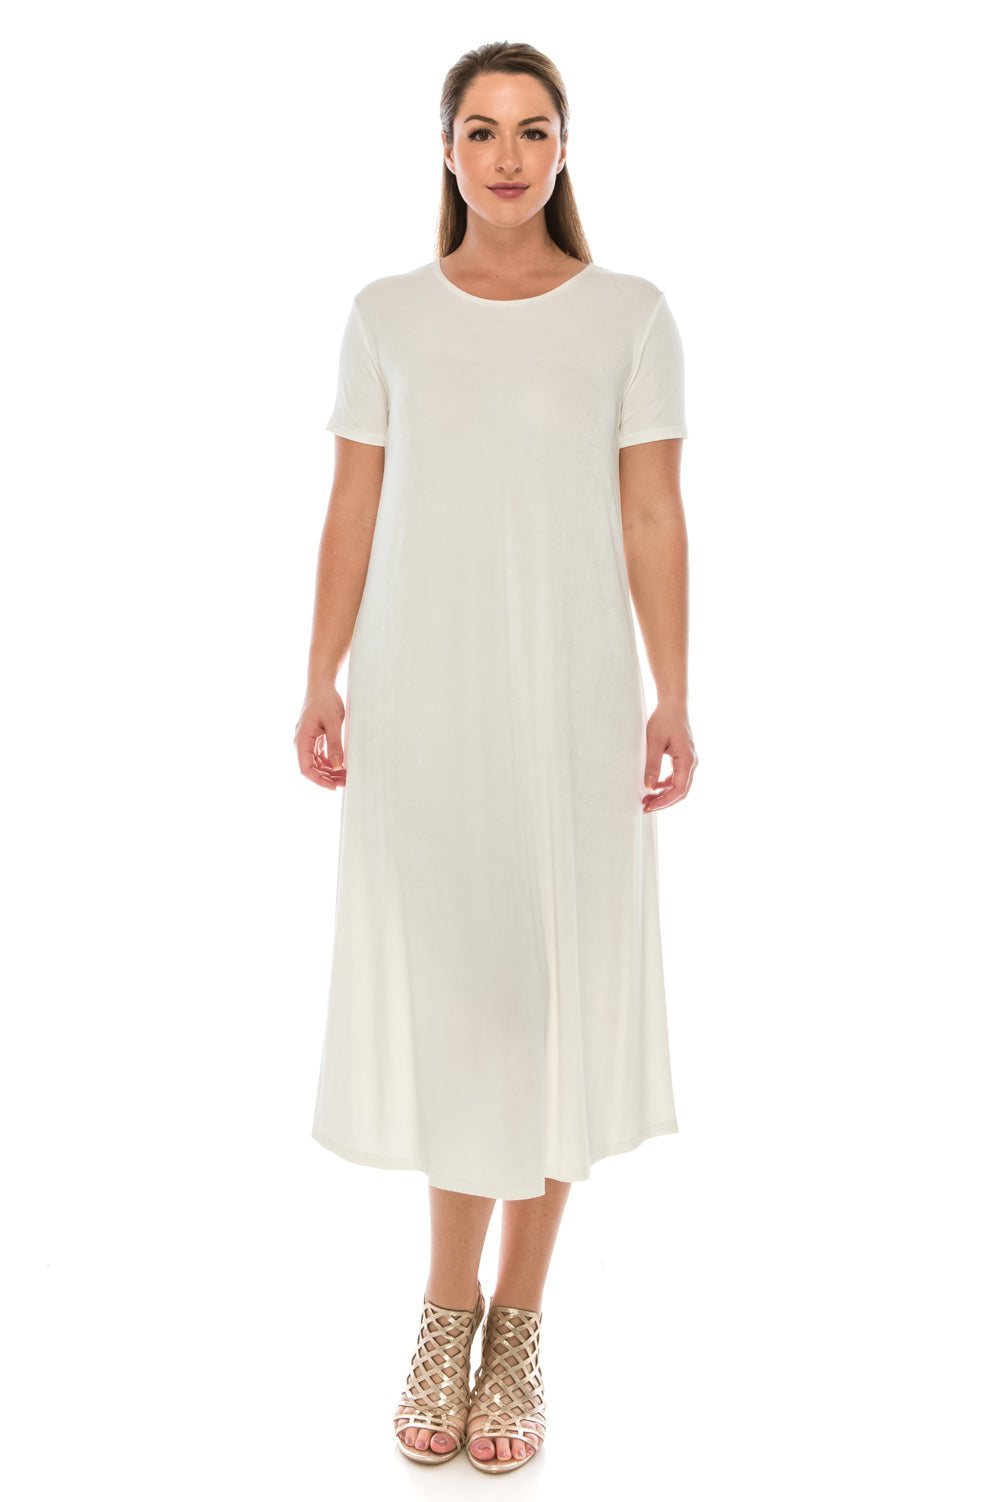 Jostar Women's Stretchy Long Dress Short Sleeve, 702BN-S - Jostar Online